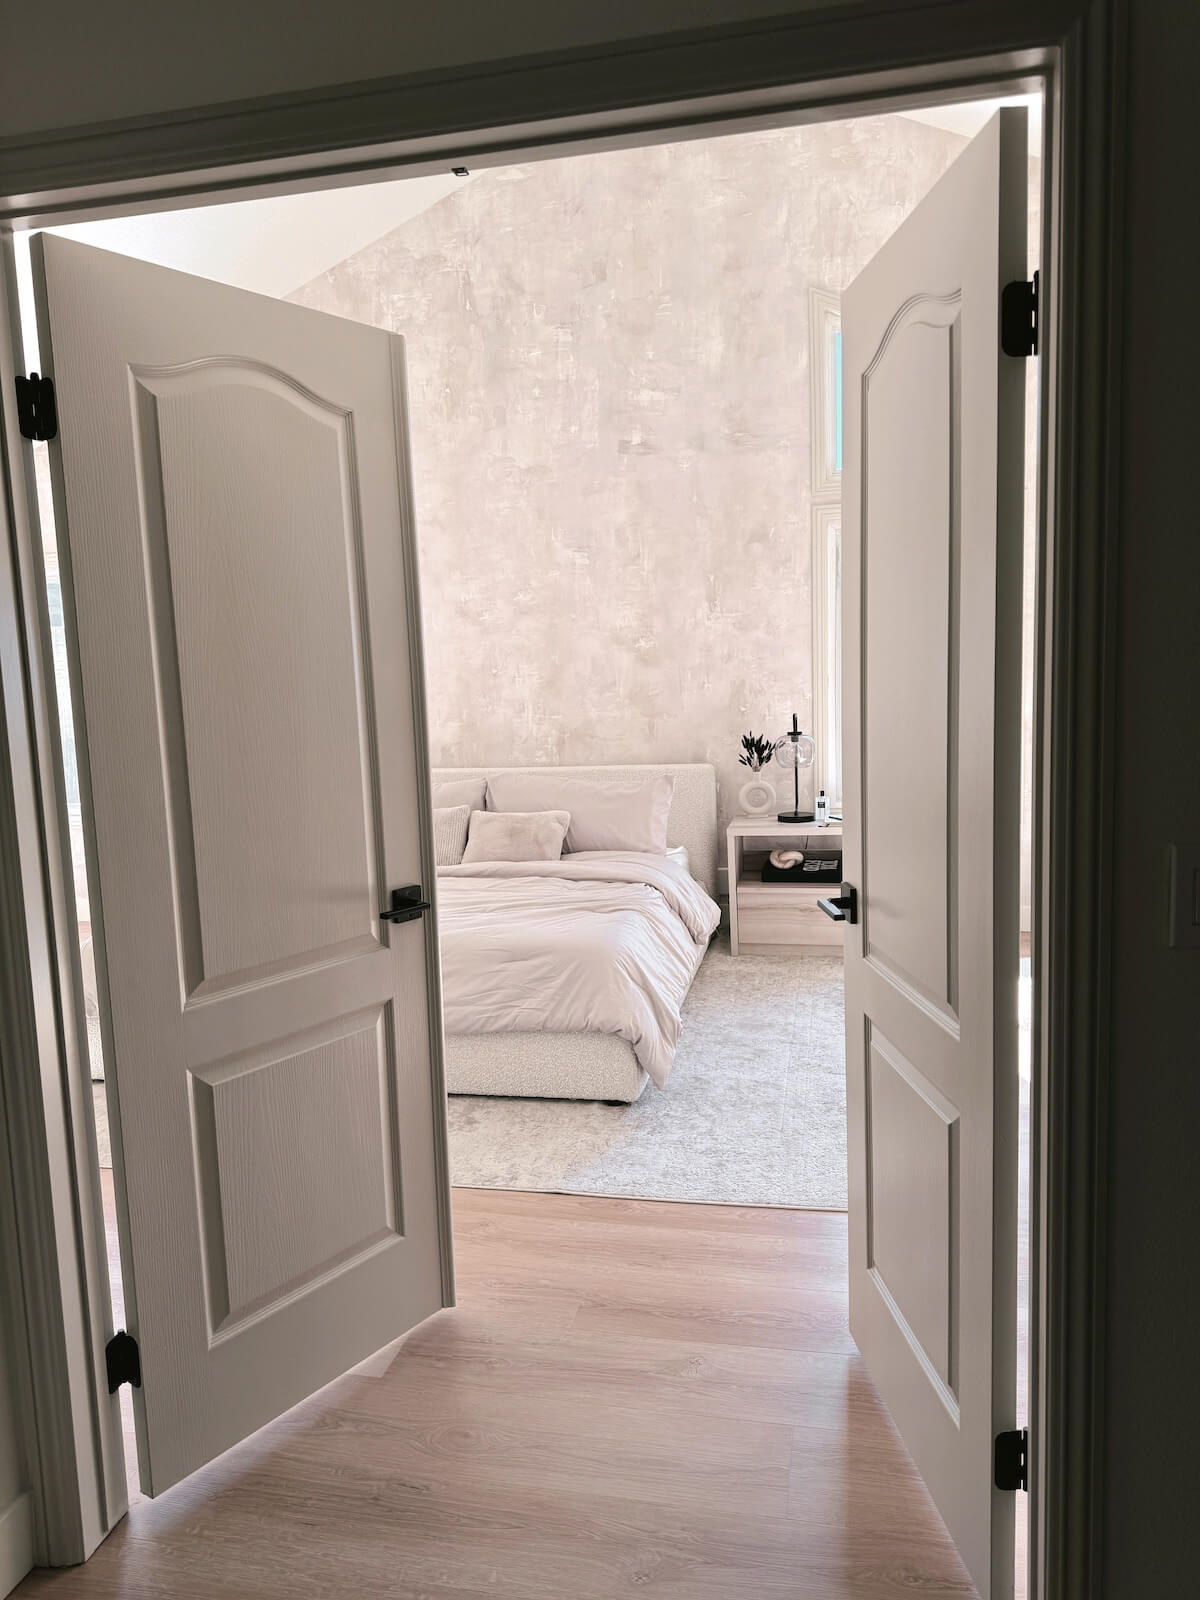 Master Bedroom | Neutral Bedroom | Wallpaper inspo | Wall Blush |HAYLEY40 for 40% off